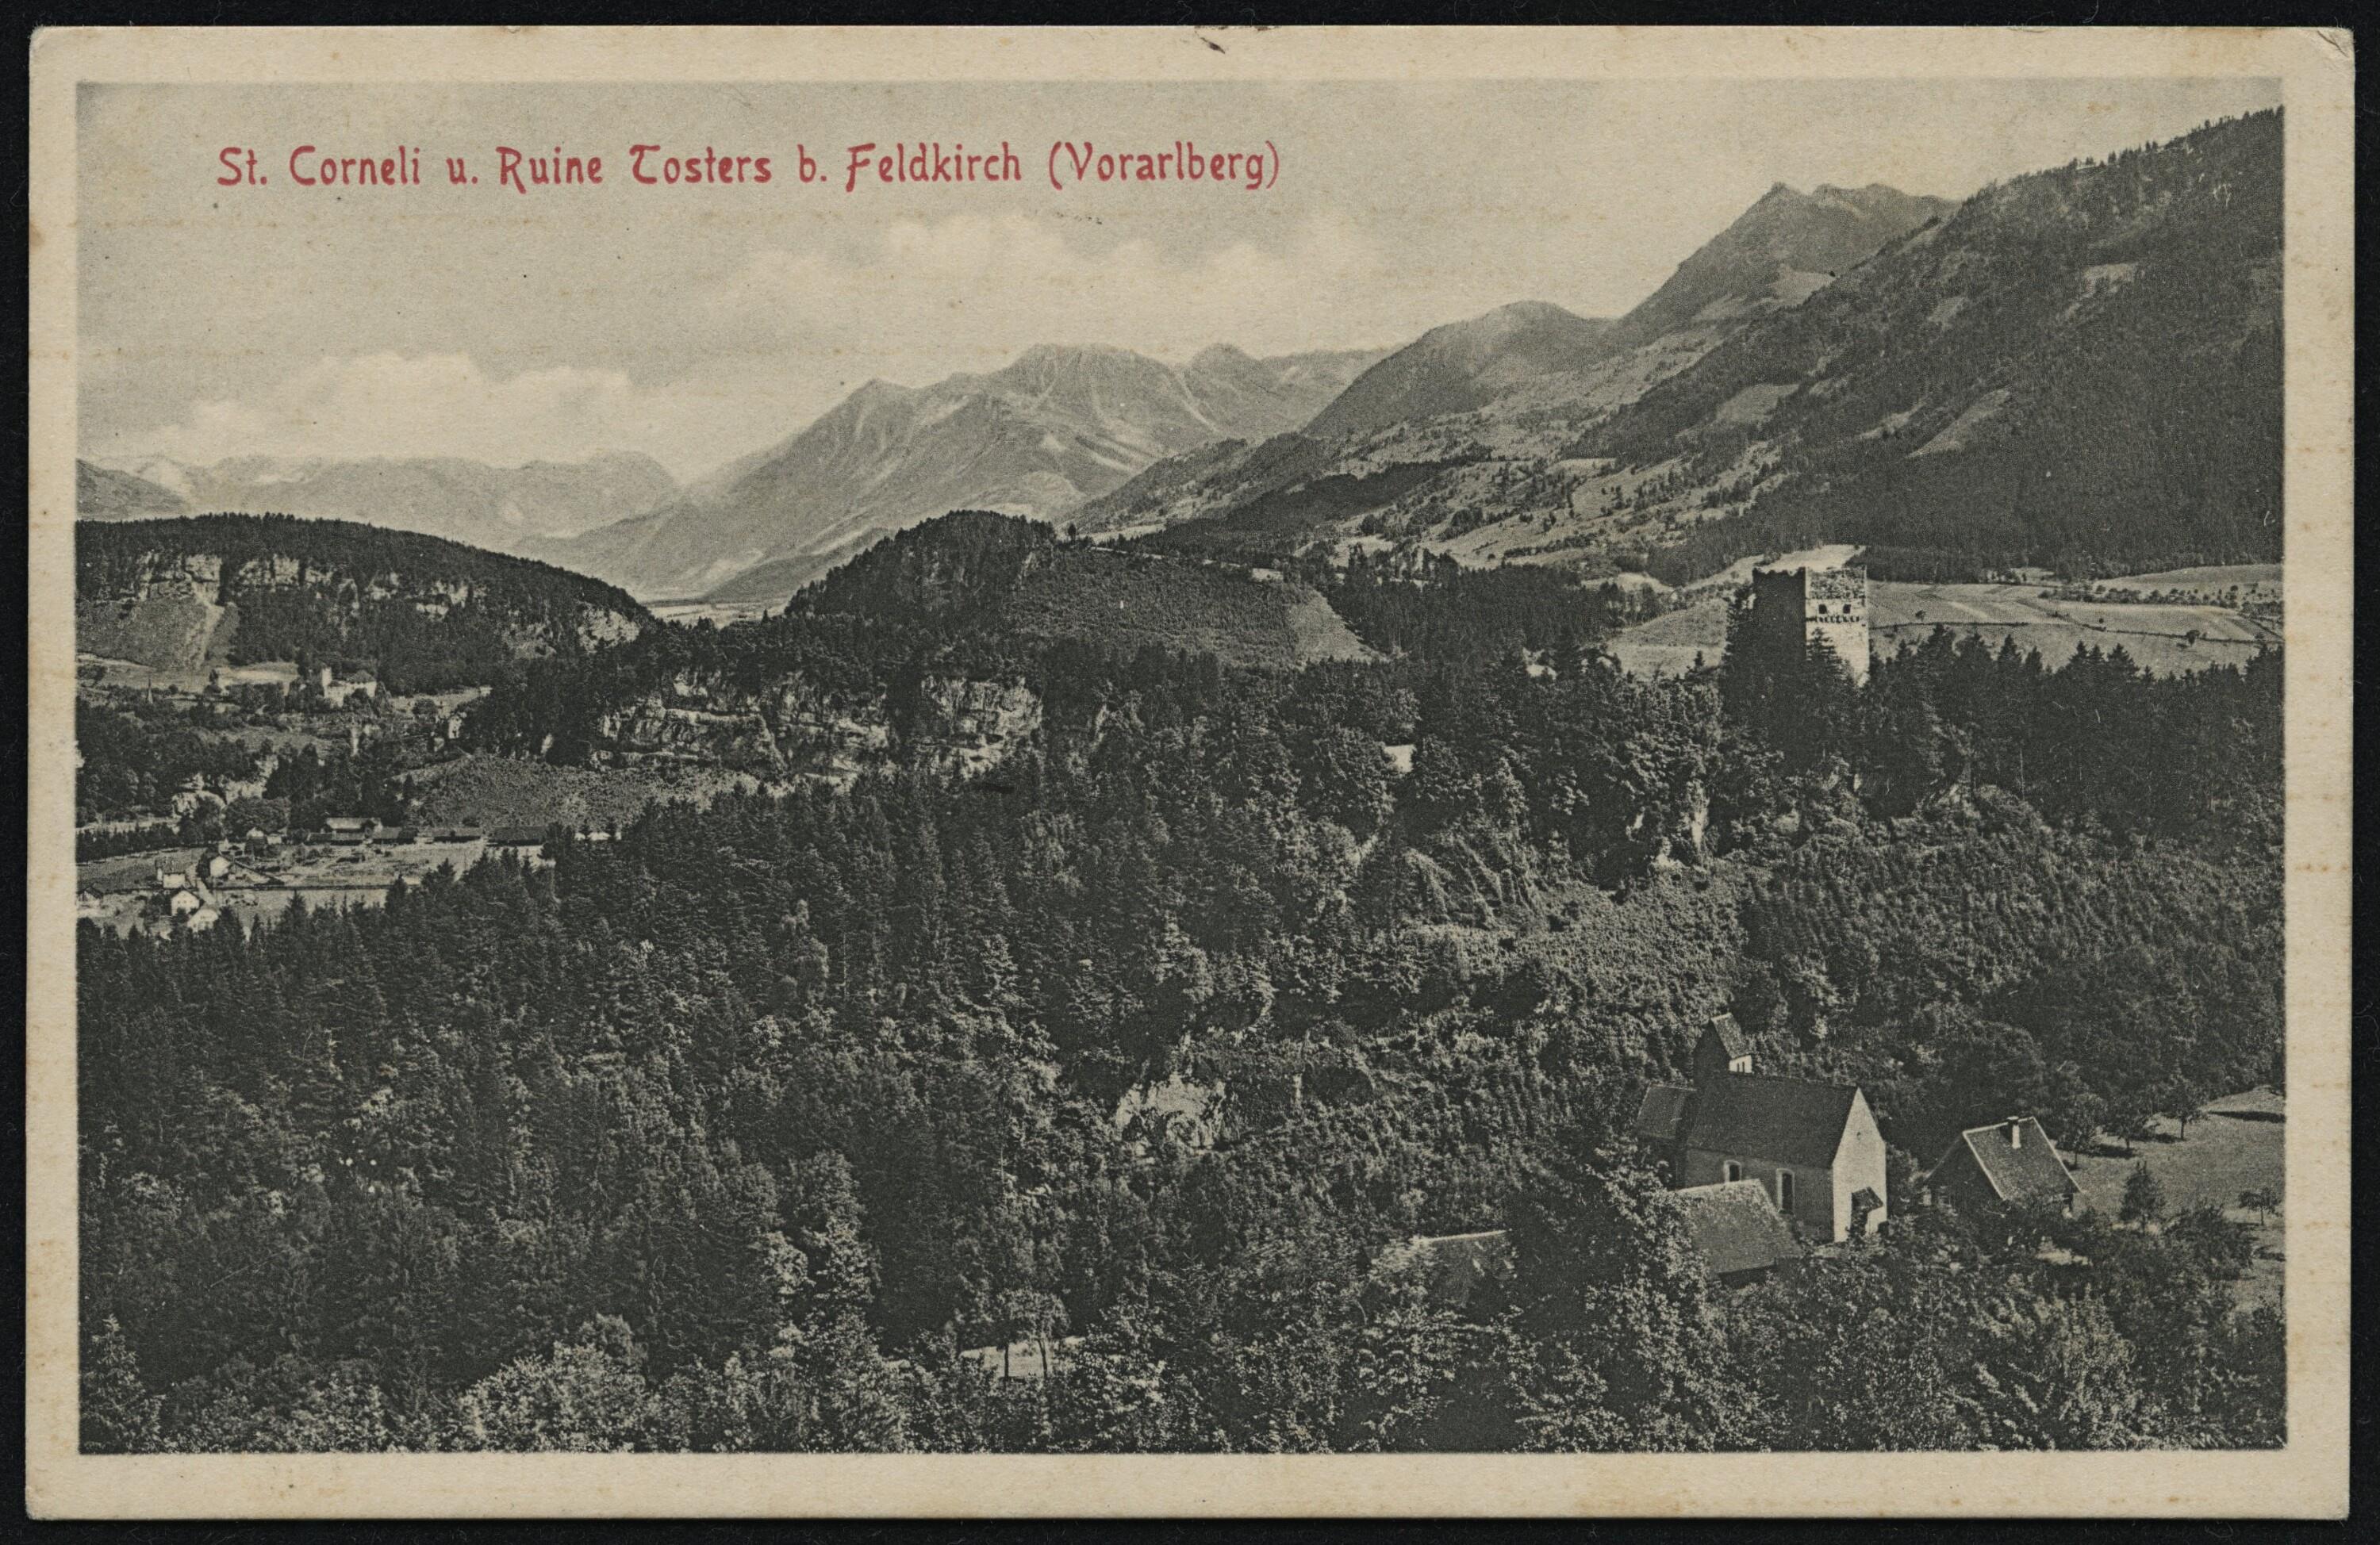 St. Corneli u. Ruine Tosters b. Feldkirch (Vorarlberg)></div>


    <hr>
    <div class=